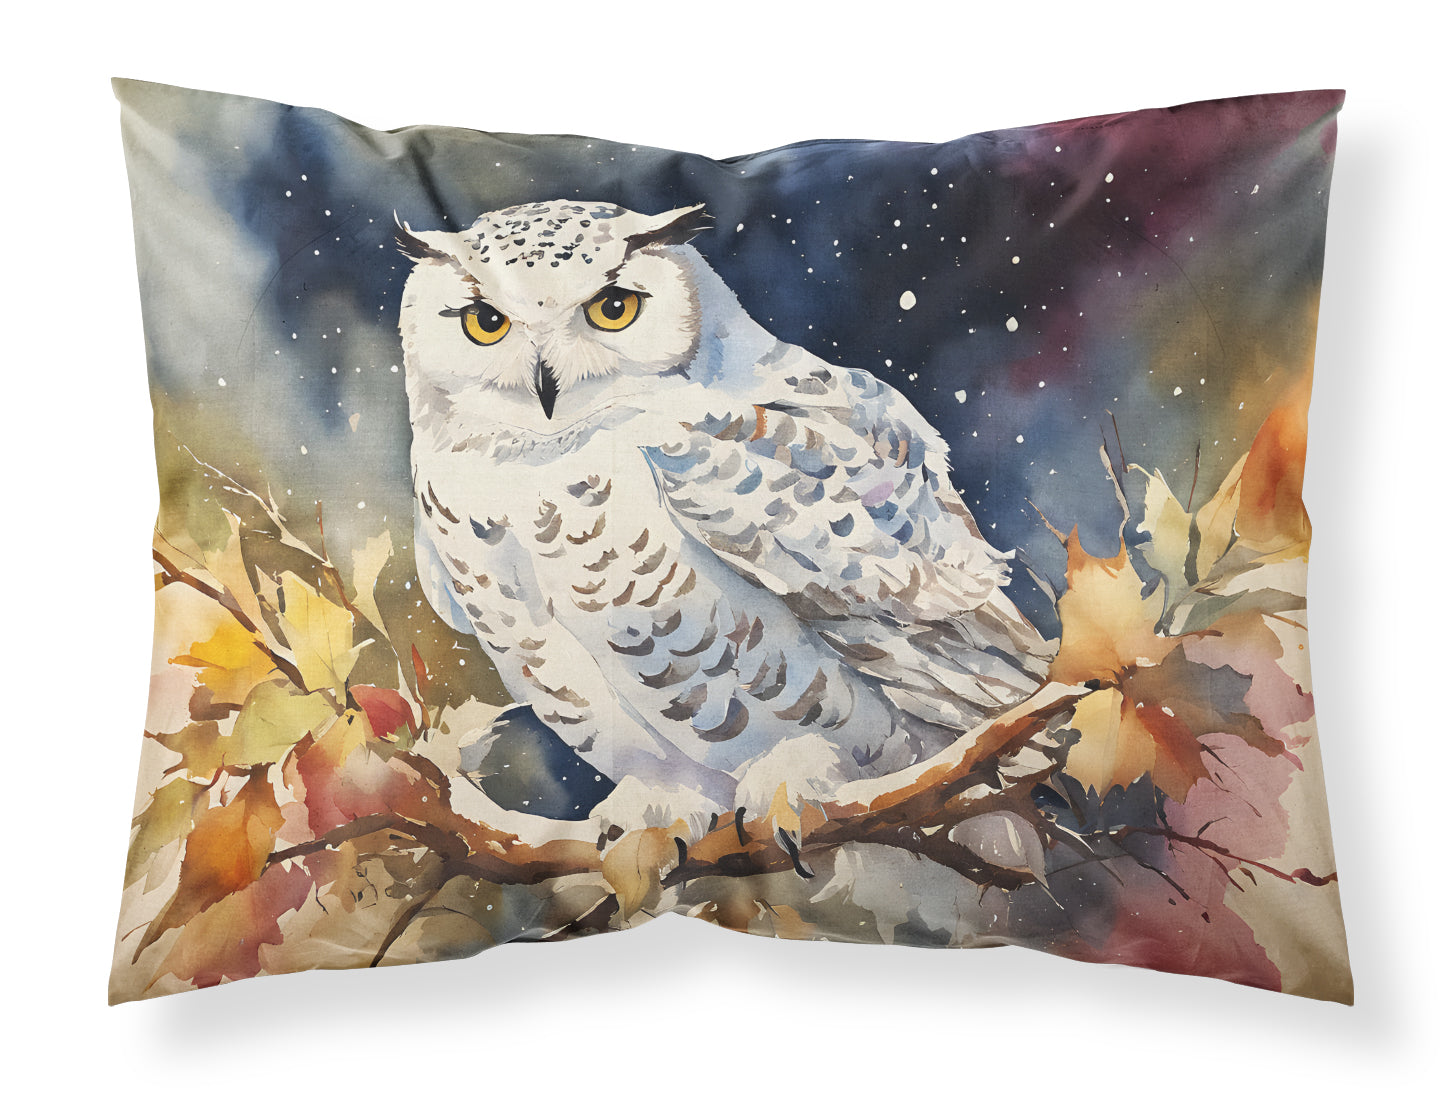 Buy this Snowy Owl Standard Pillowcase